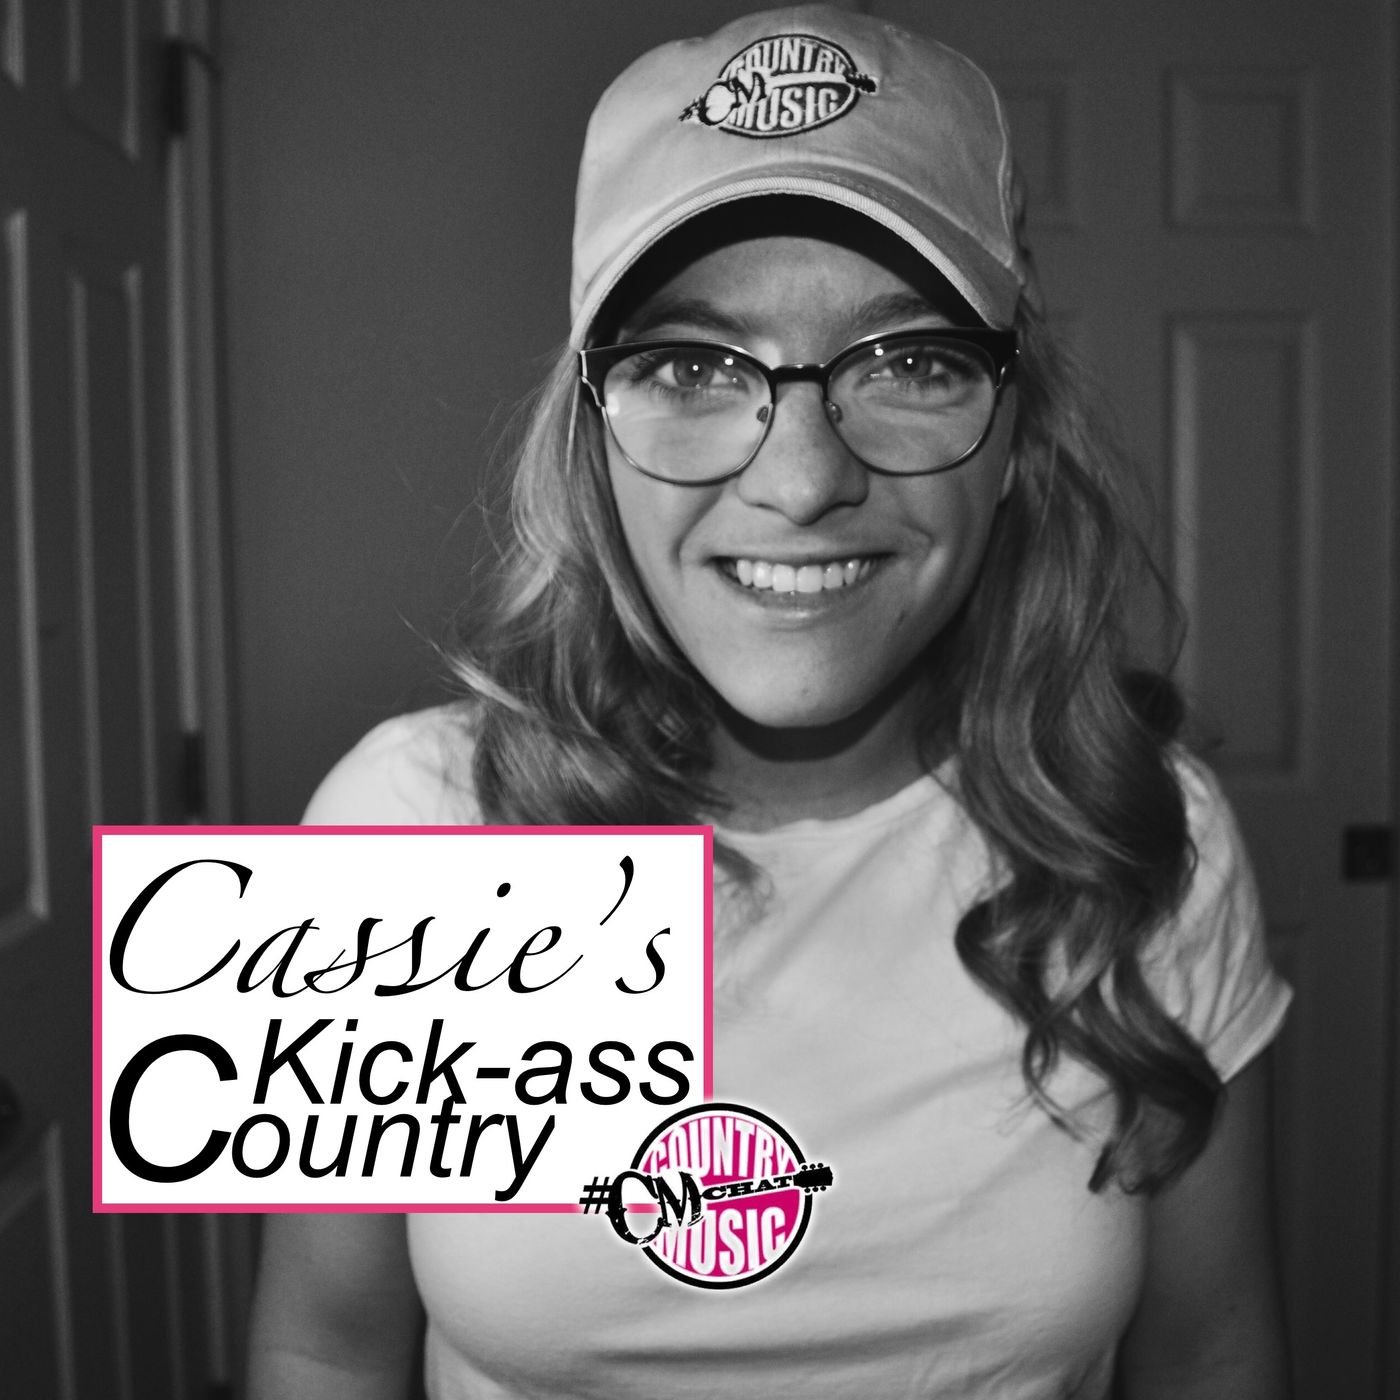 Cassie's Kick-ass Country